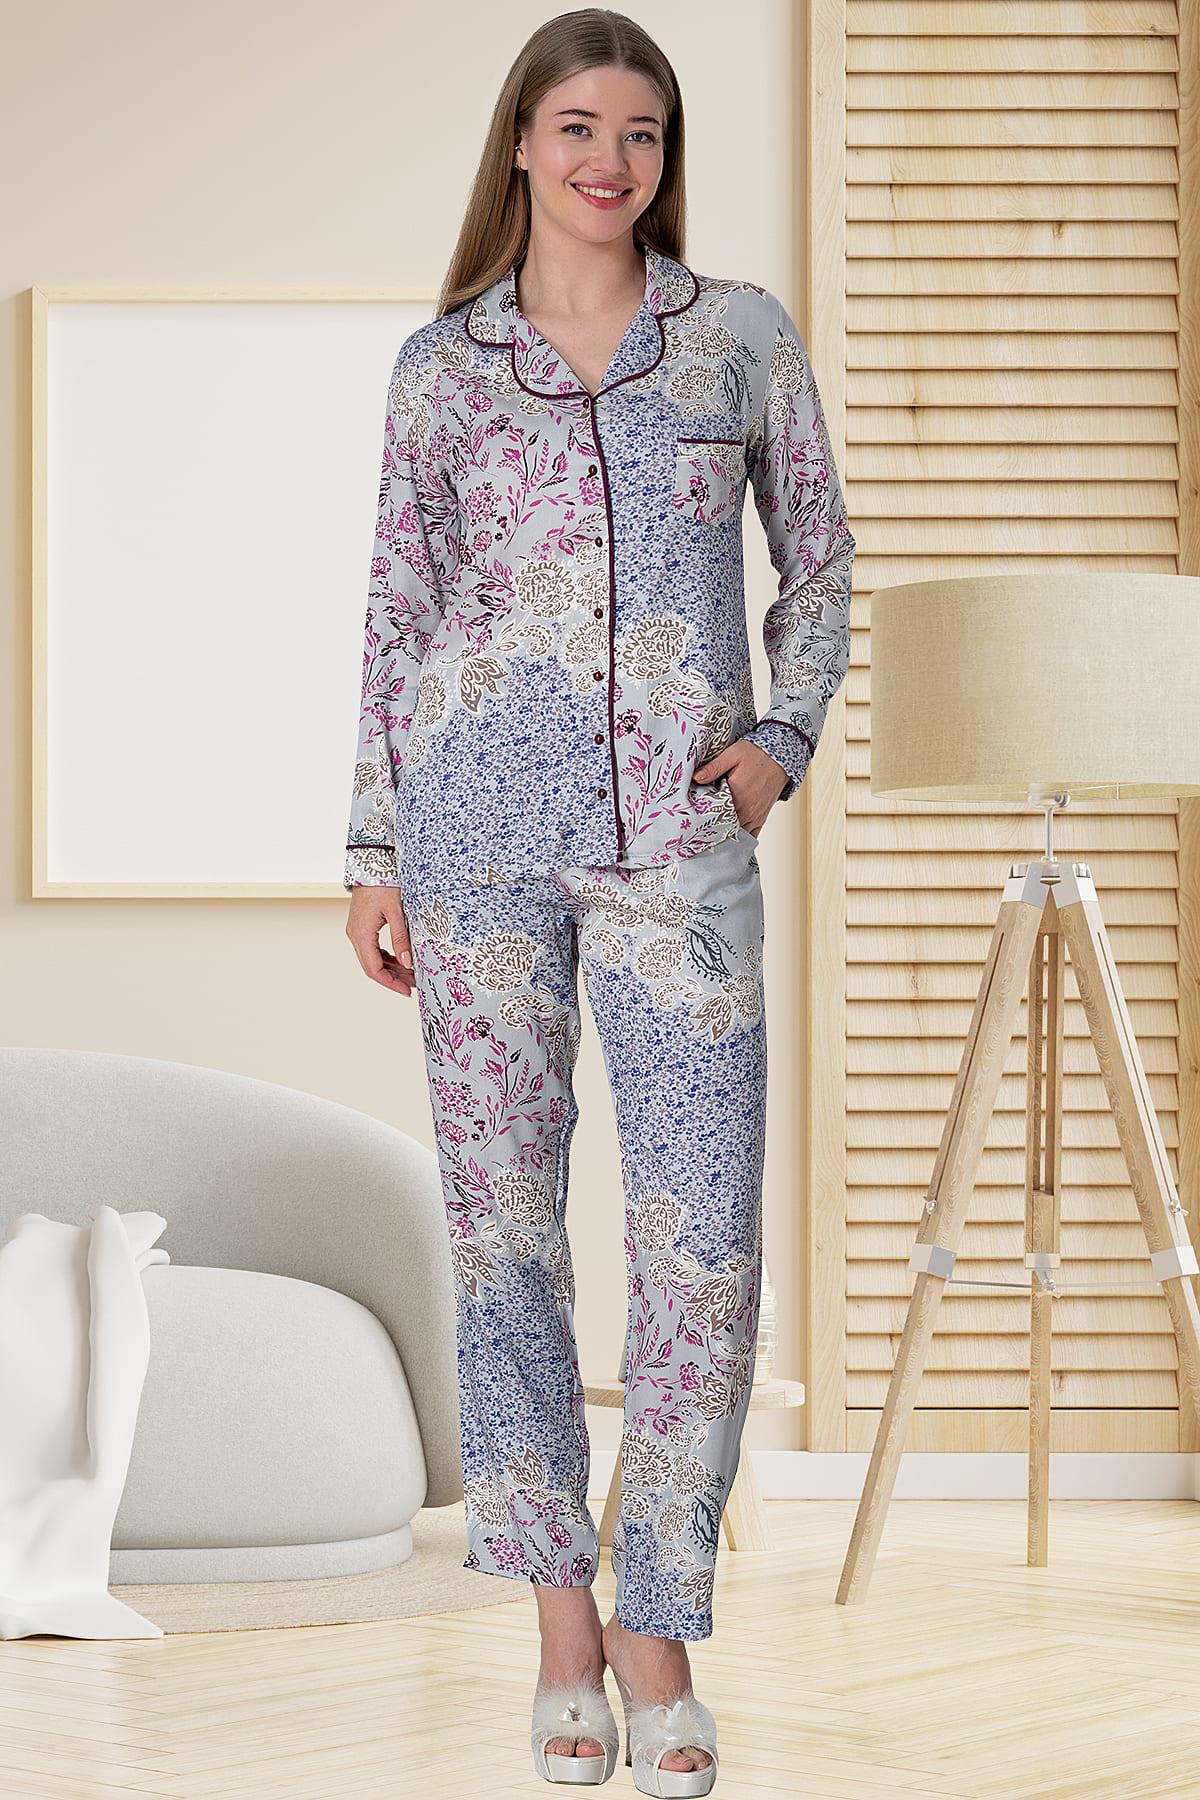 Shopymommy 5809 Patterned Maternity & Nursing Pajamas Grey